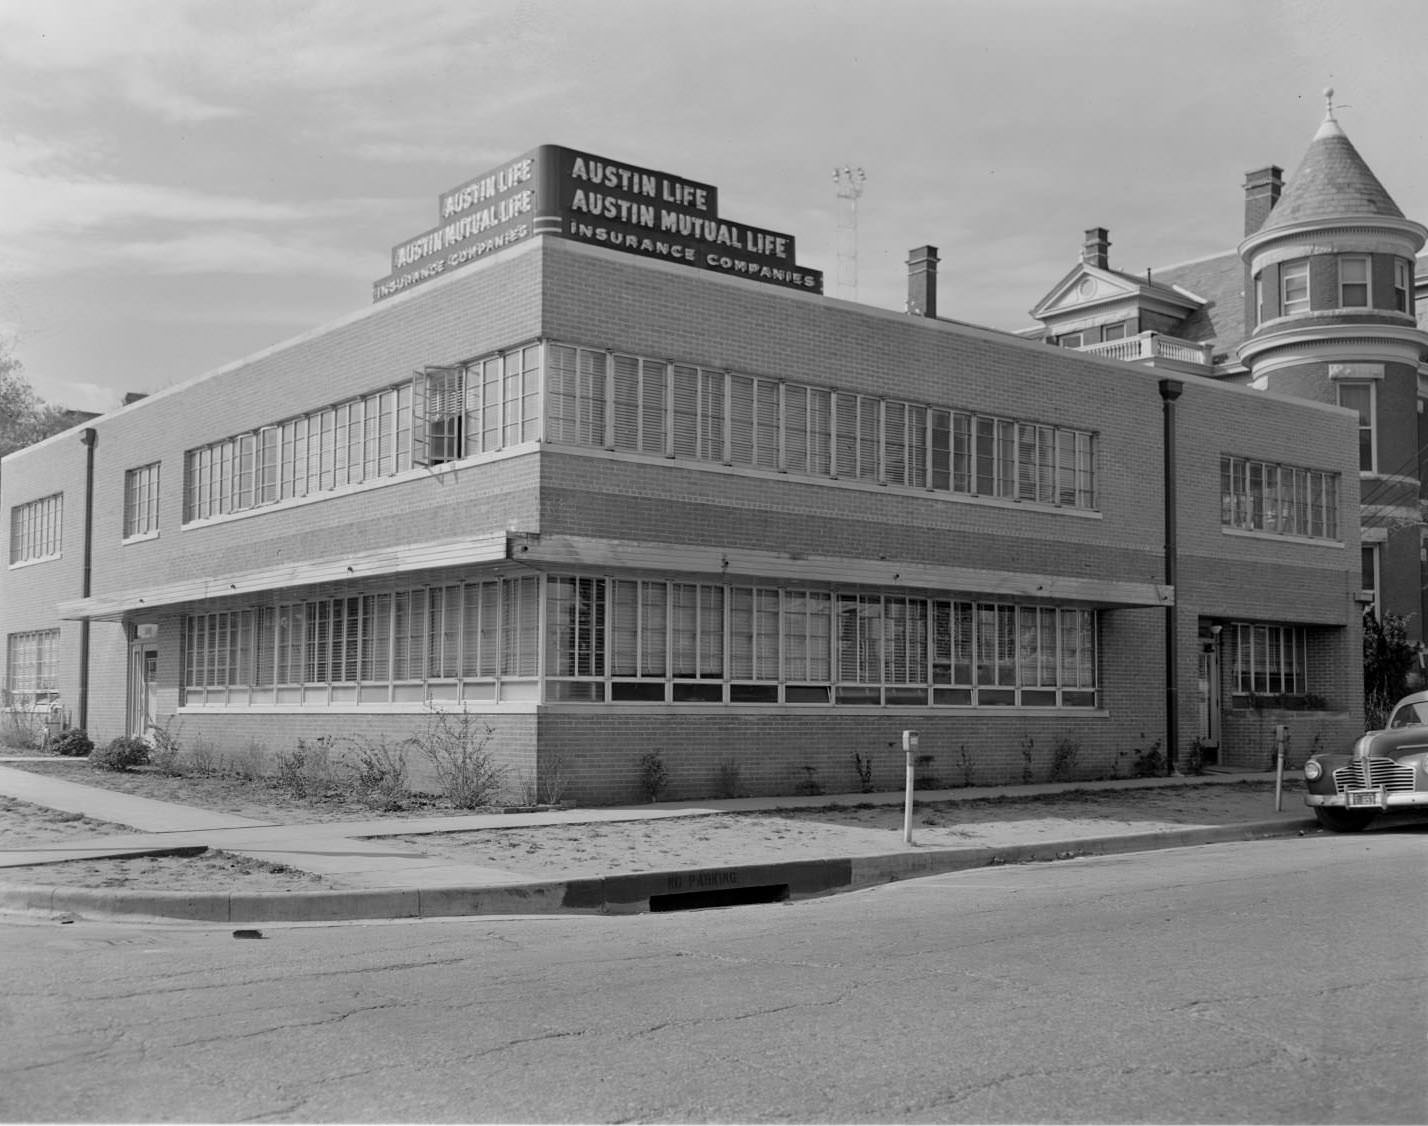 Austin Life, Ausin Mutual Life Building, 1951